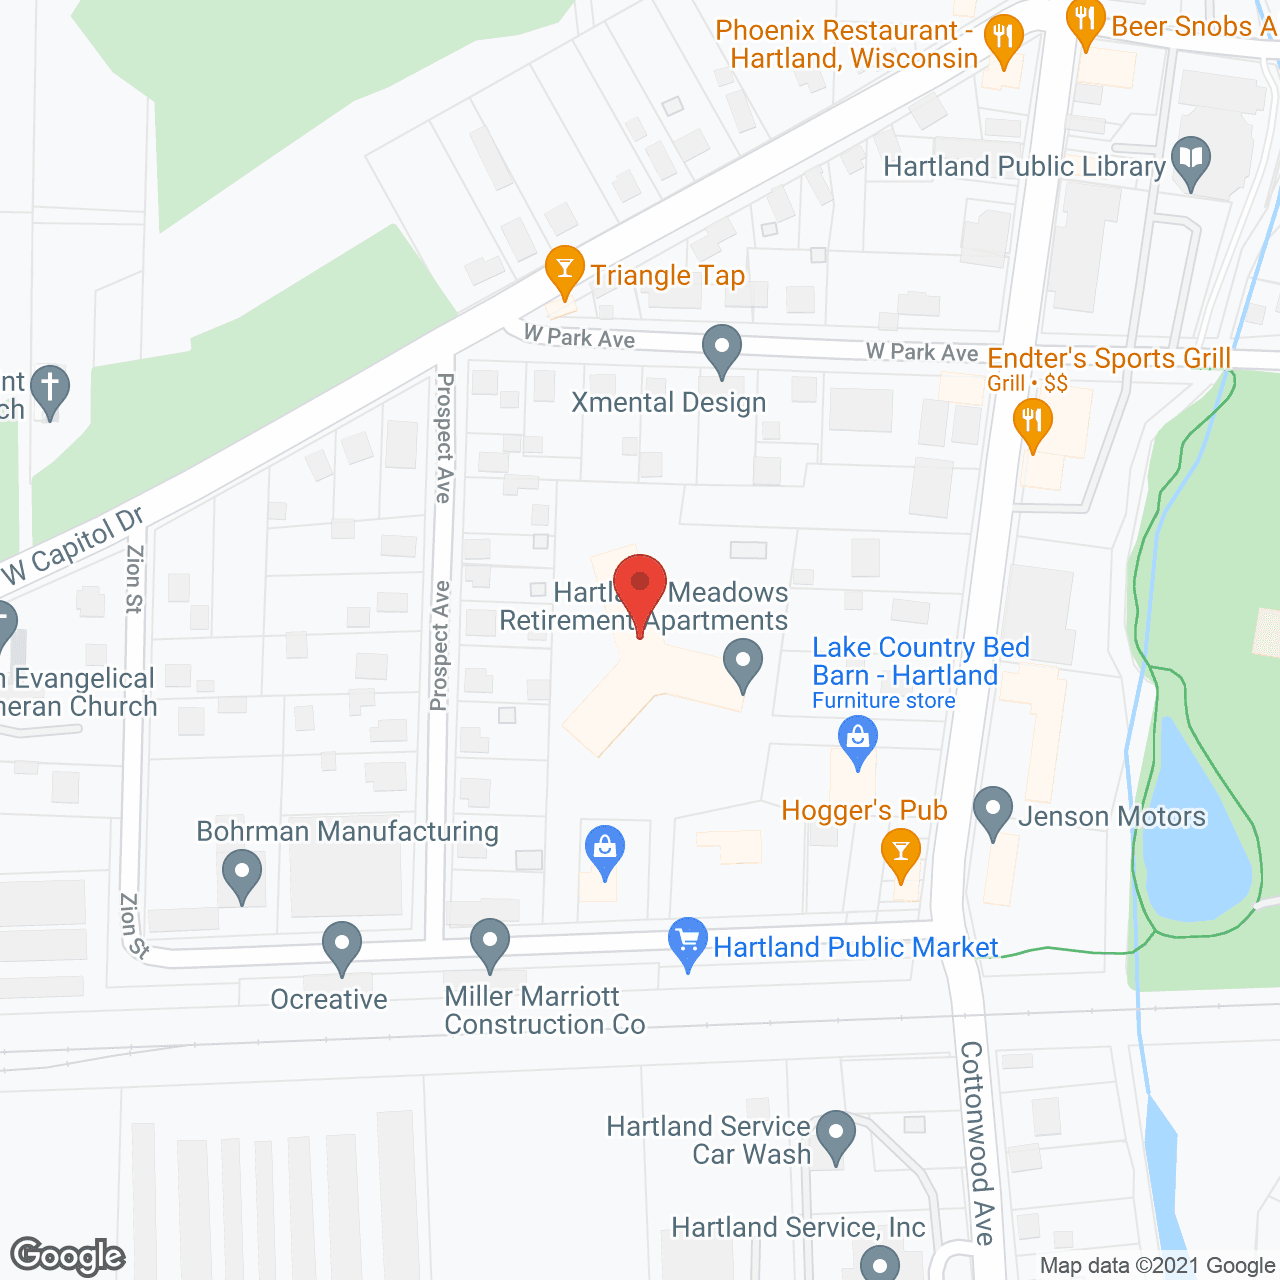 Hartland Meadows Retirement Apartments in google map